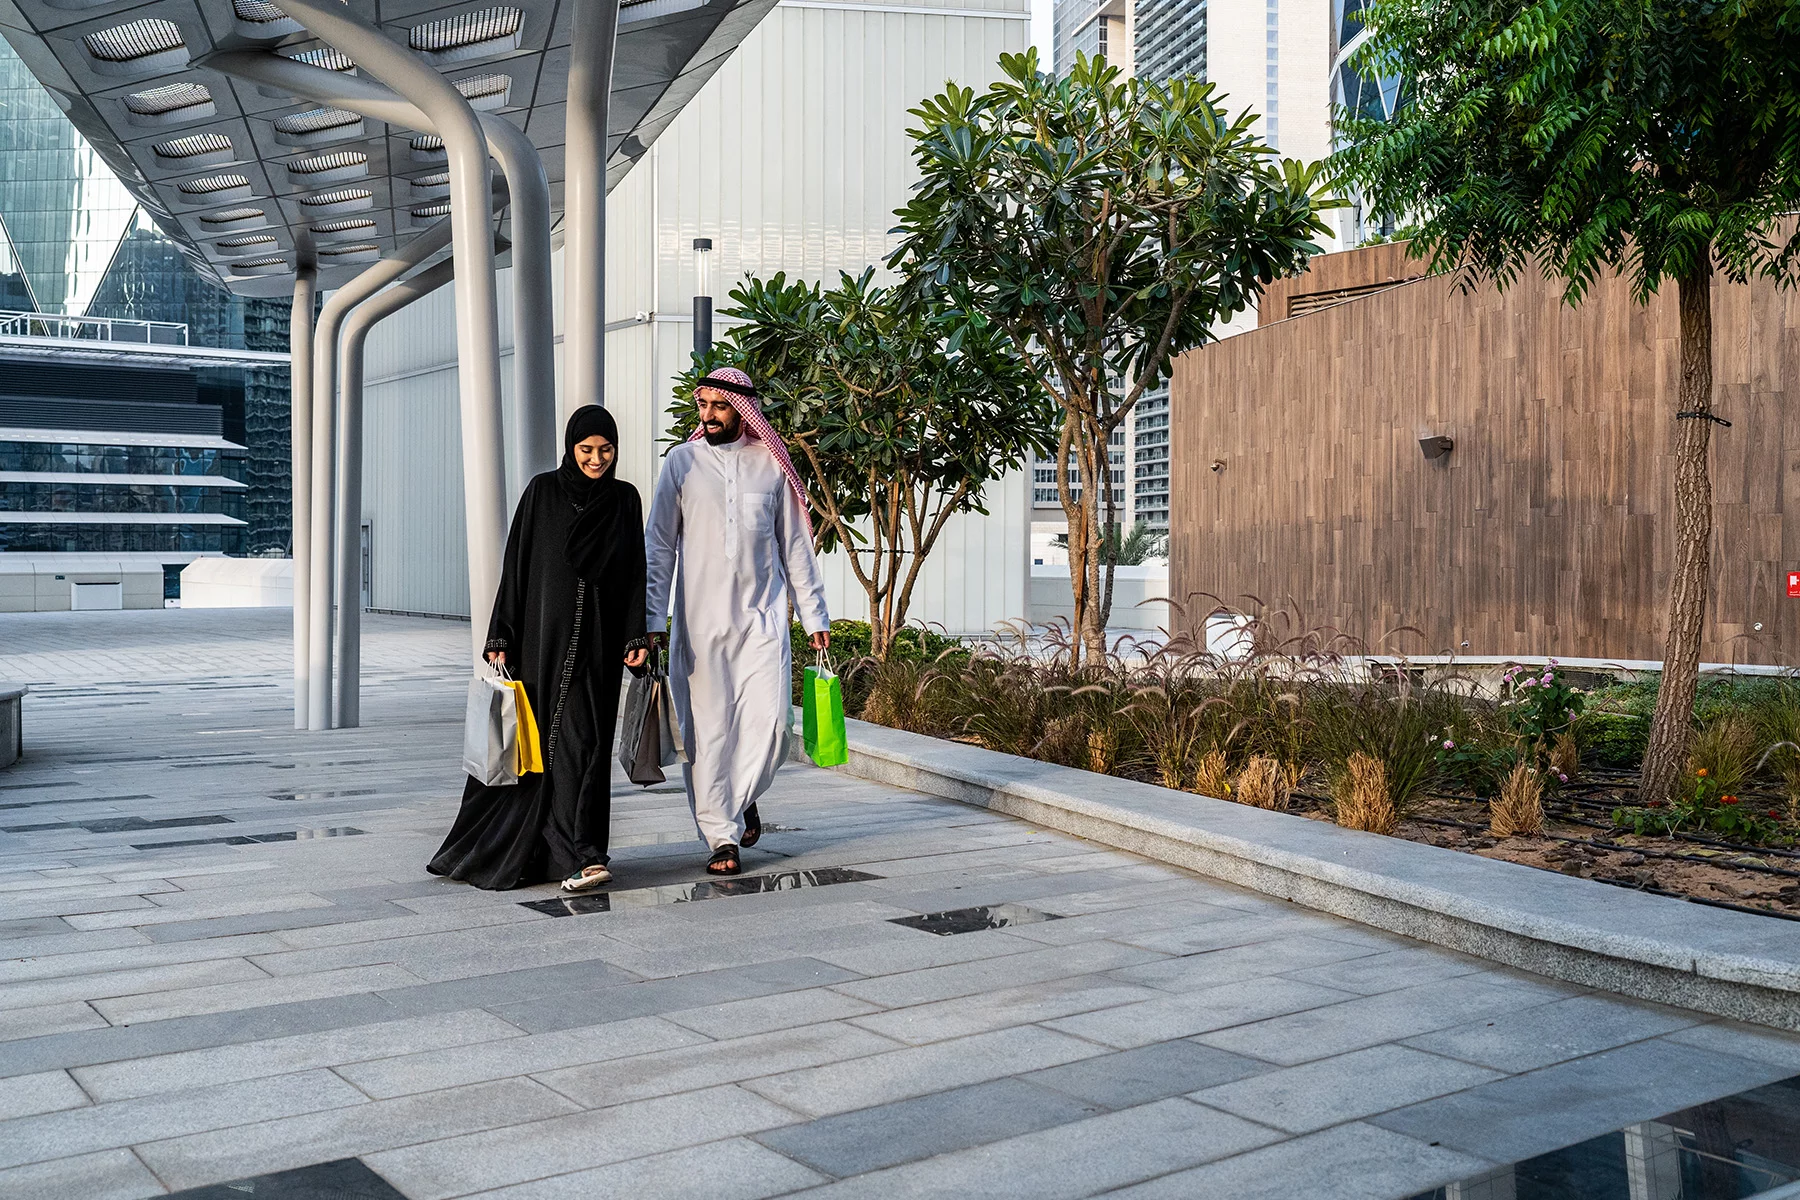 Couple shopping together in Saudi Arabia